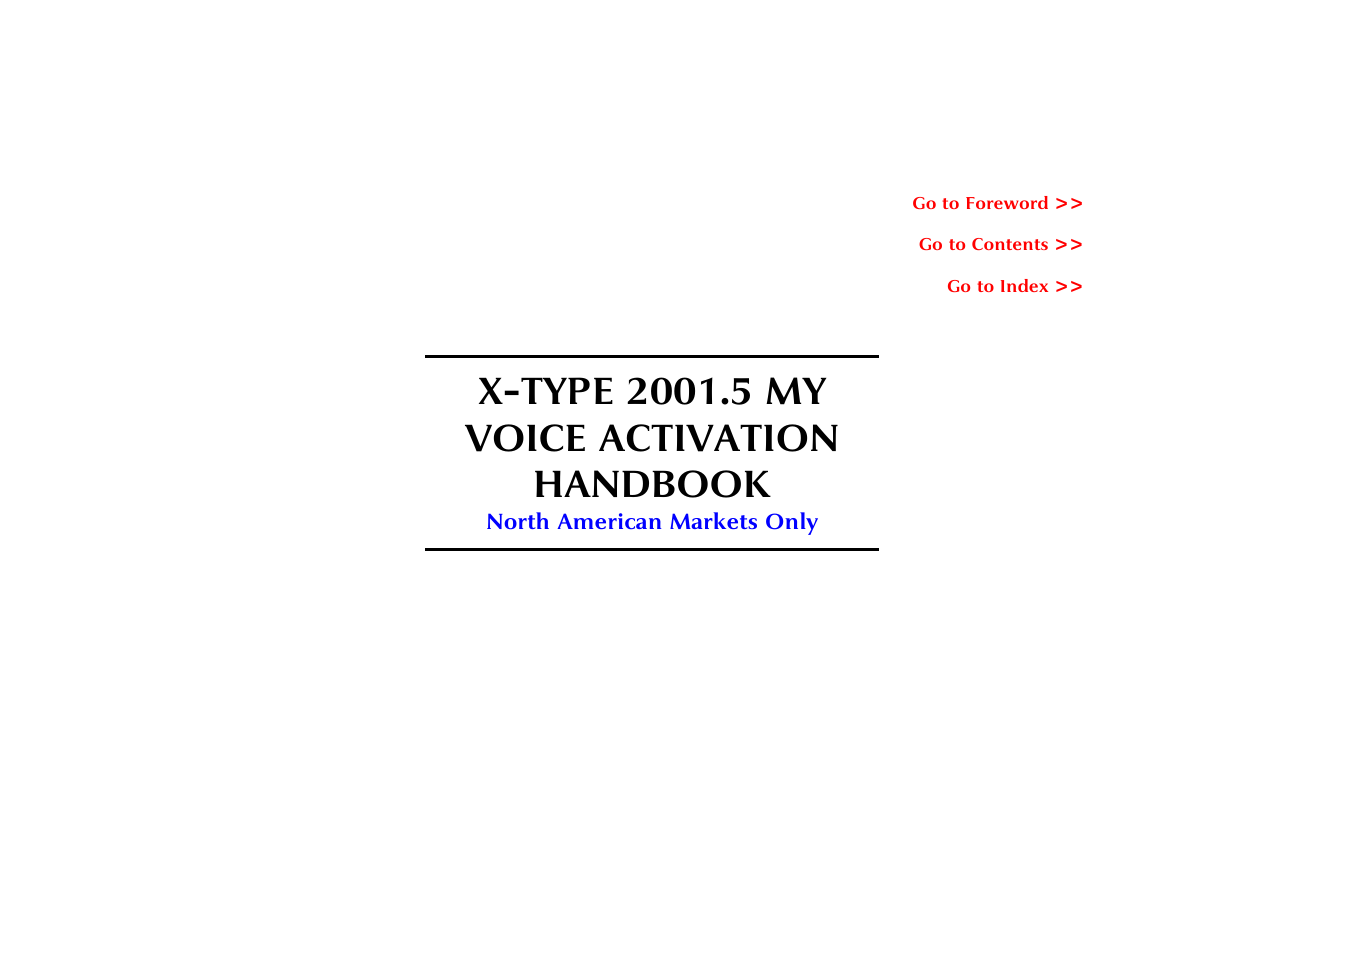 VOICE ACTIVATION X-TYPE 2001.5